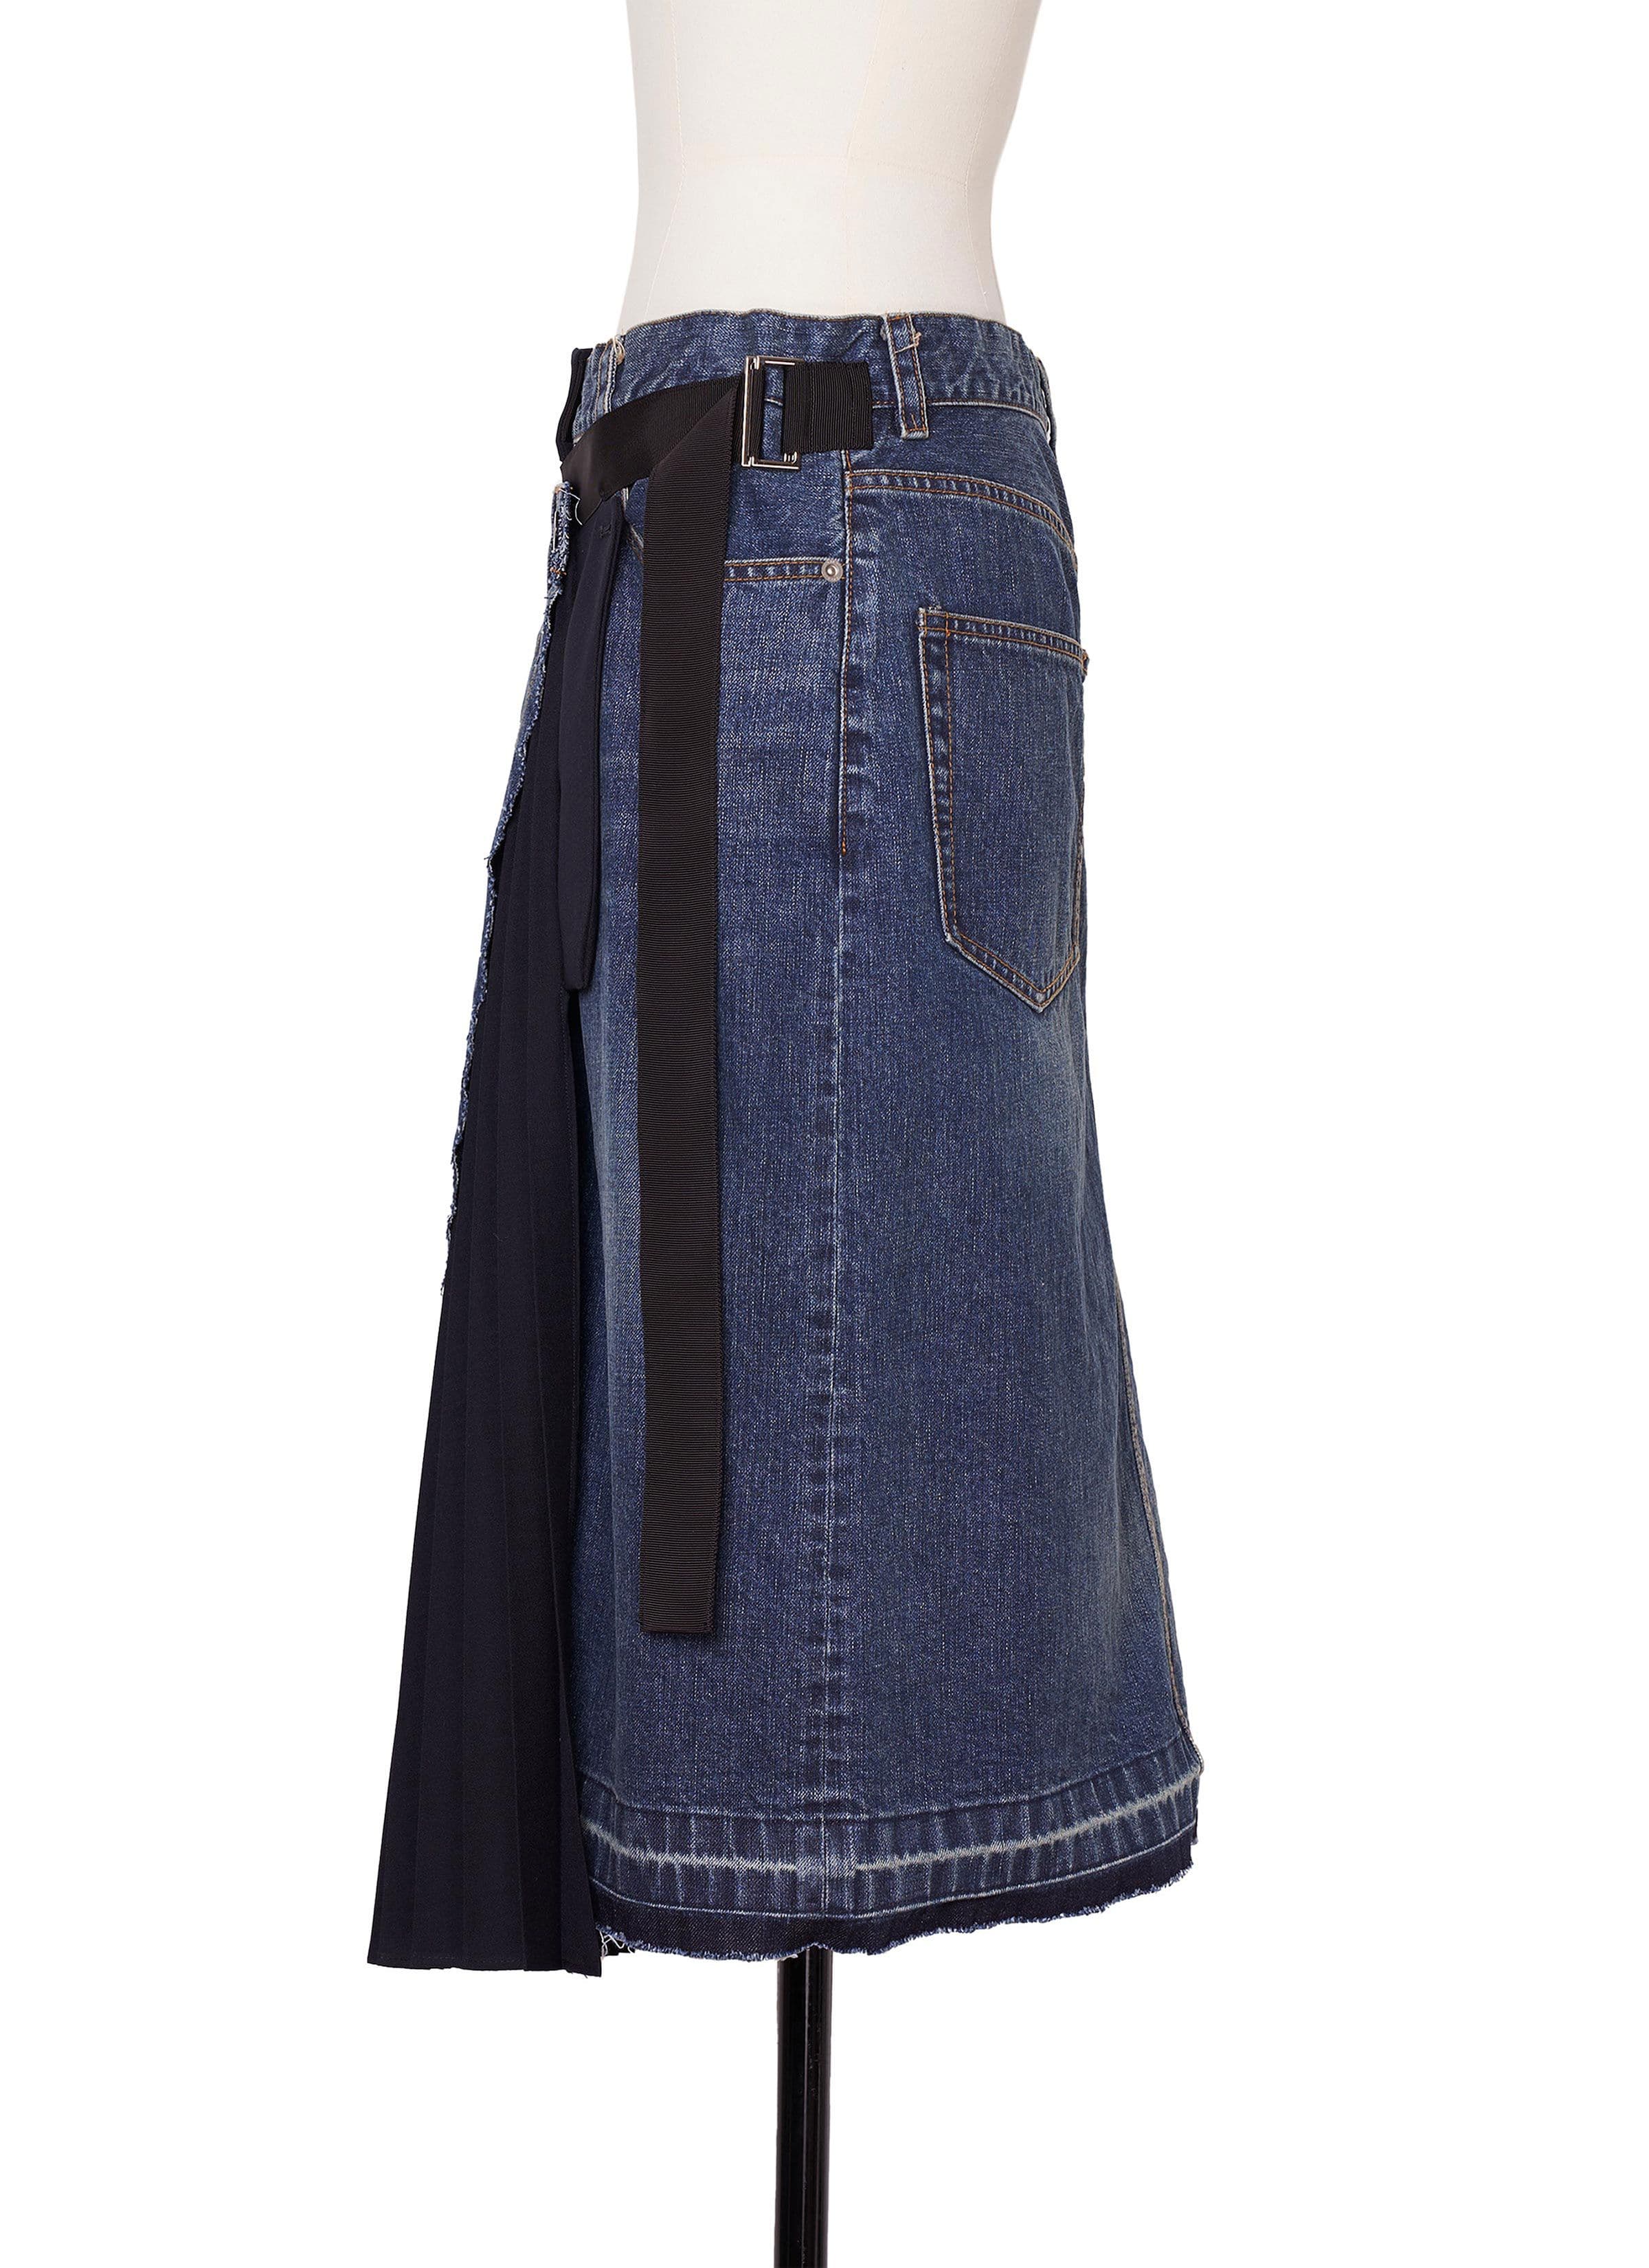 Denim x Suiting Skirt 詳細画像 BLUE 2